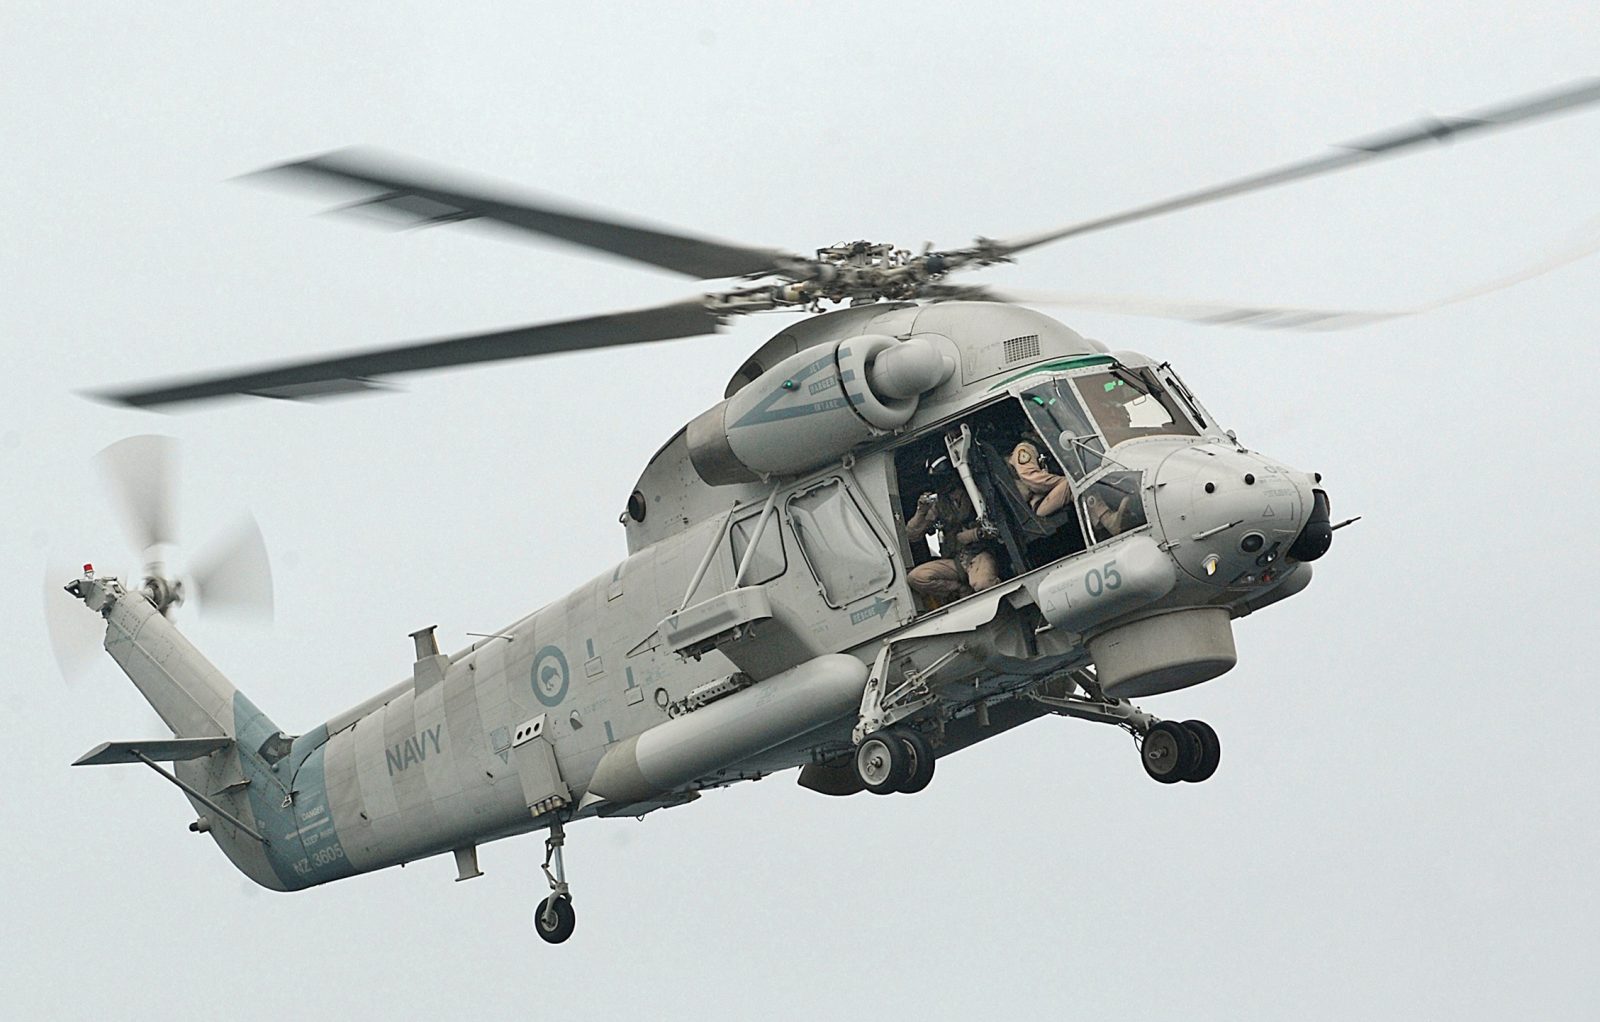 Kaman SH-2 Seasprite: The Antisubmarine Warfare (ASW) Helicopter